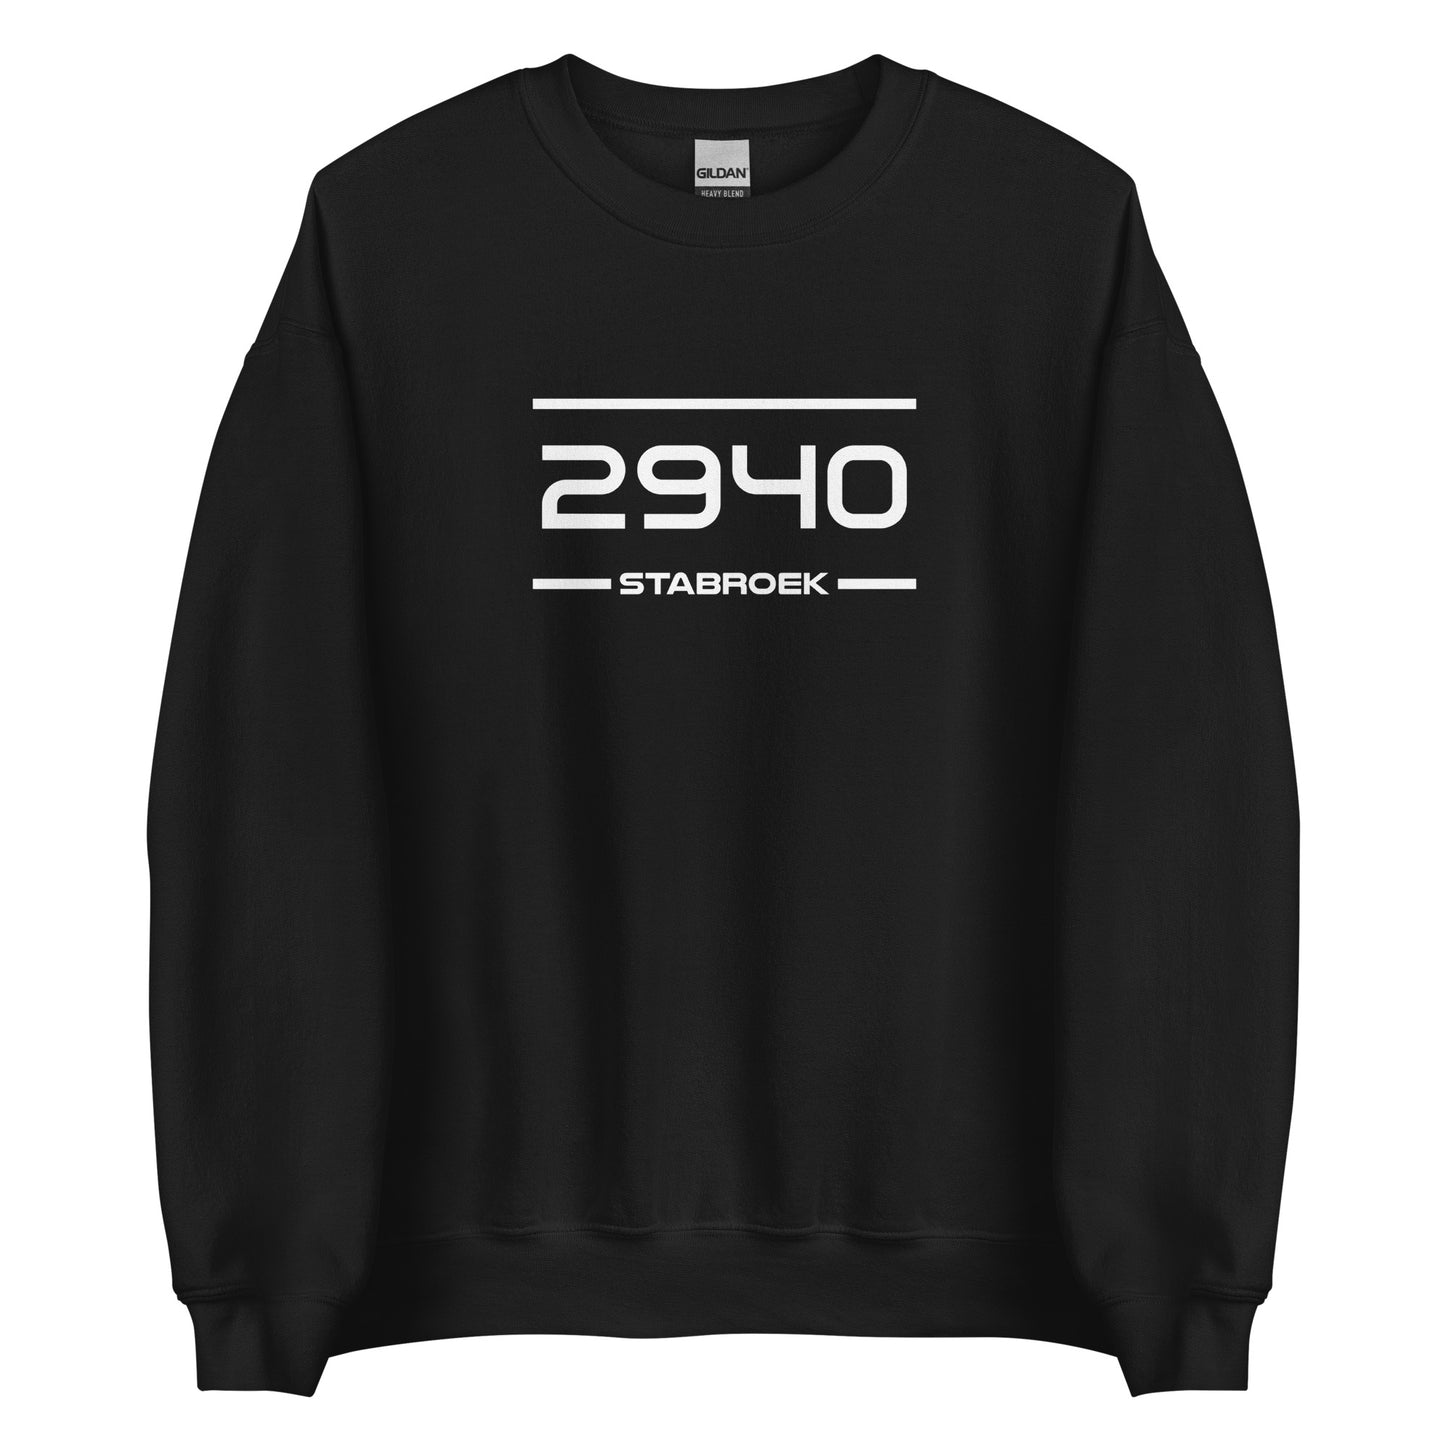 Sweater - 2940 - Stabroek (M/V)